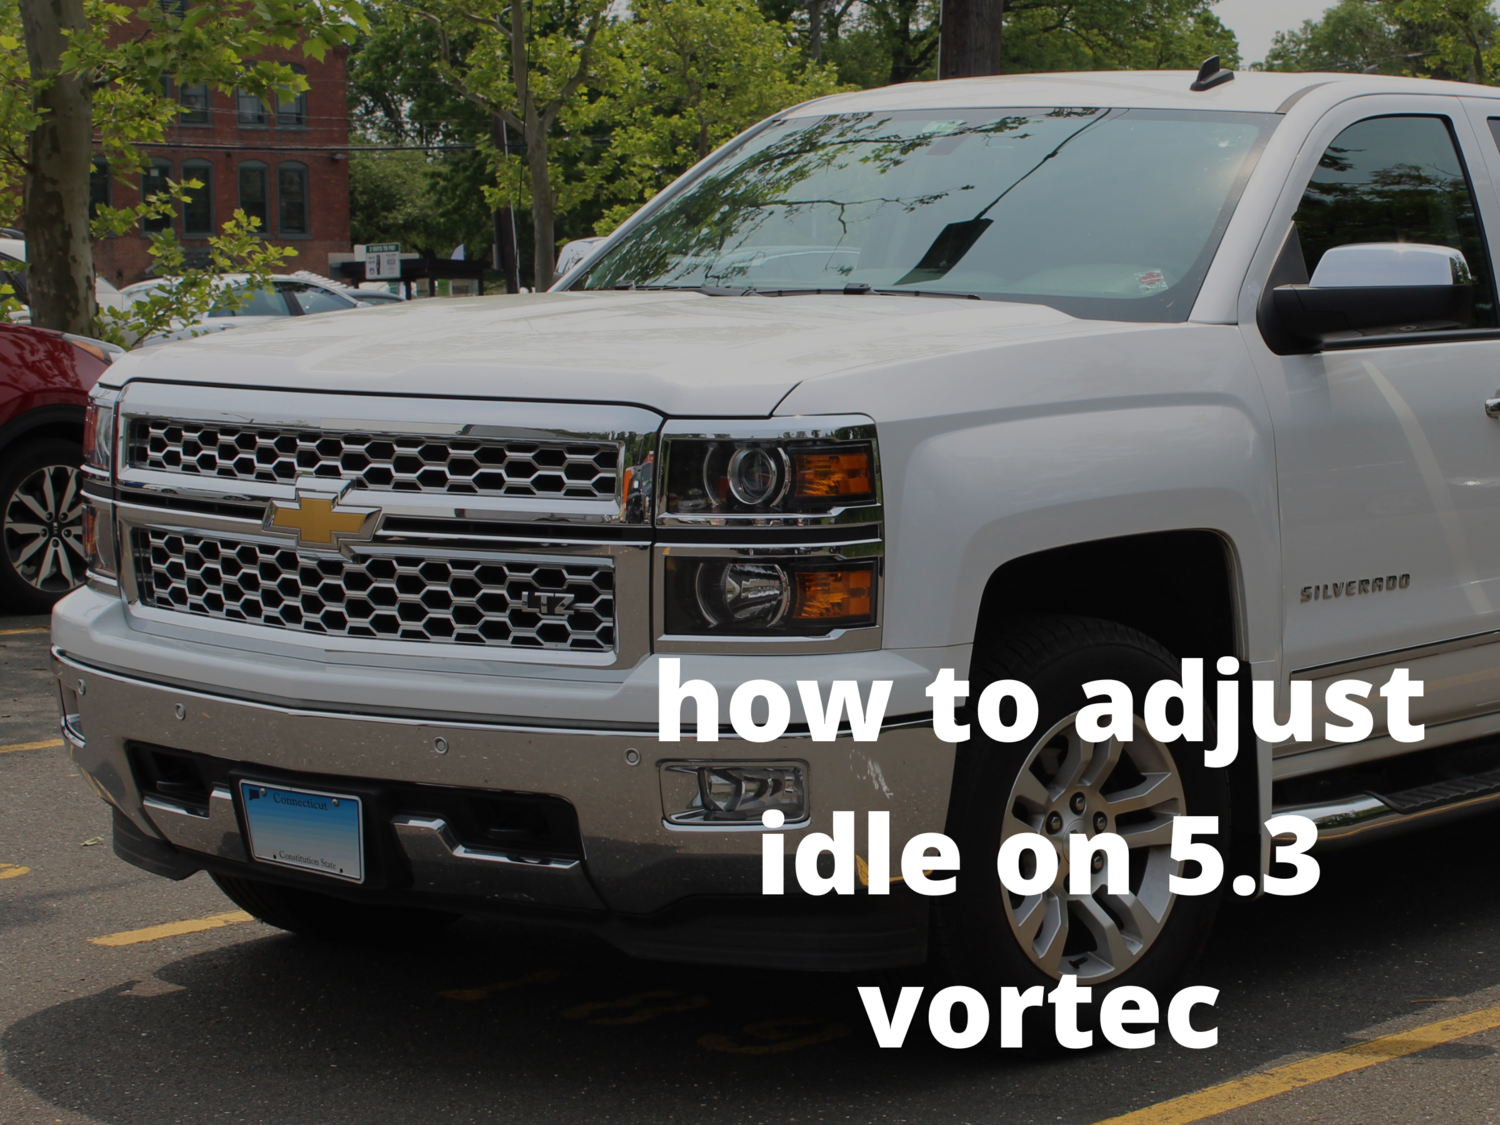 how to adjust idle on 5.3 vortec